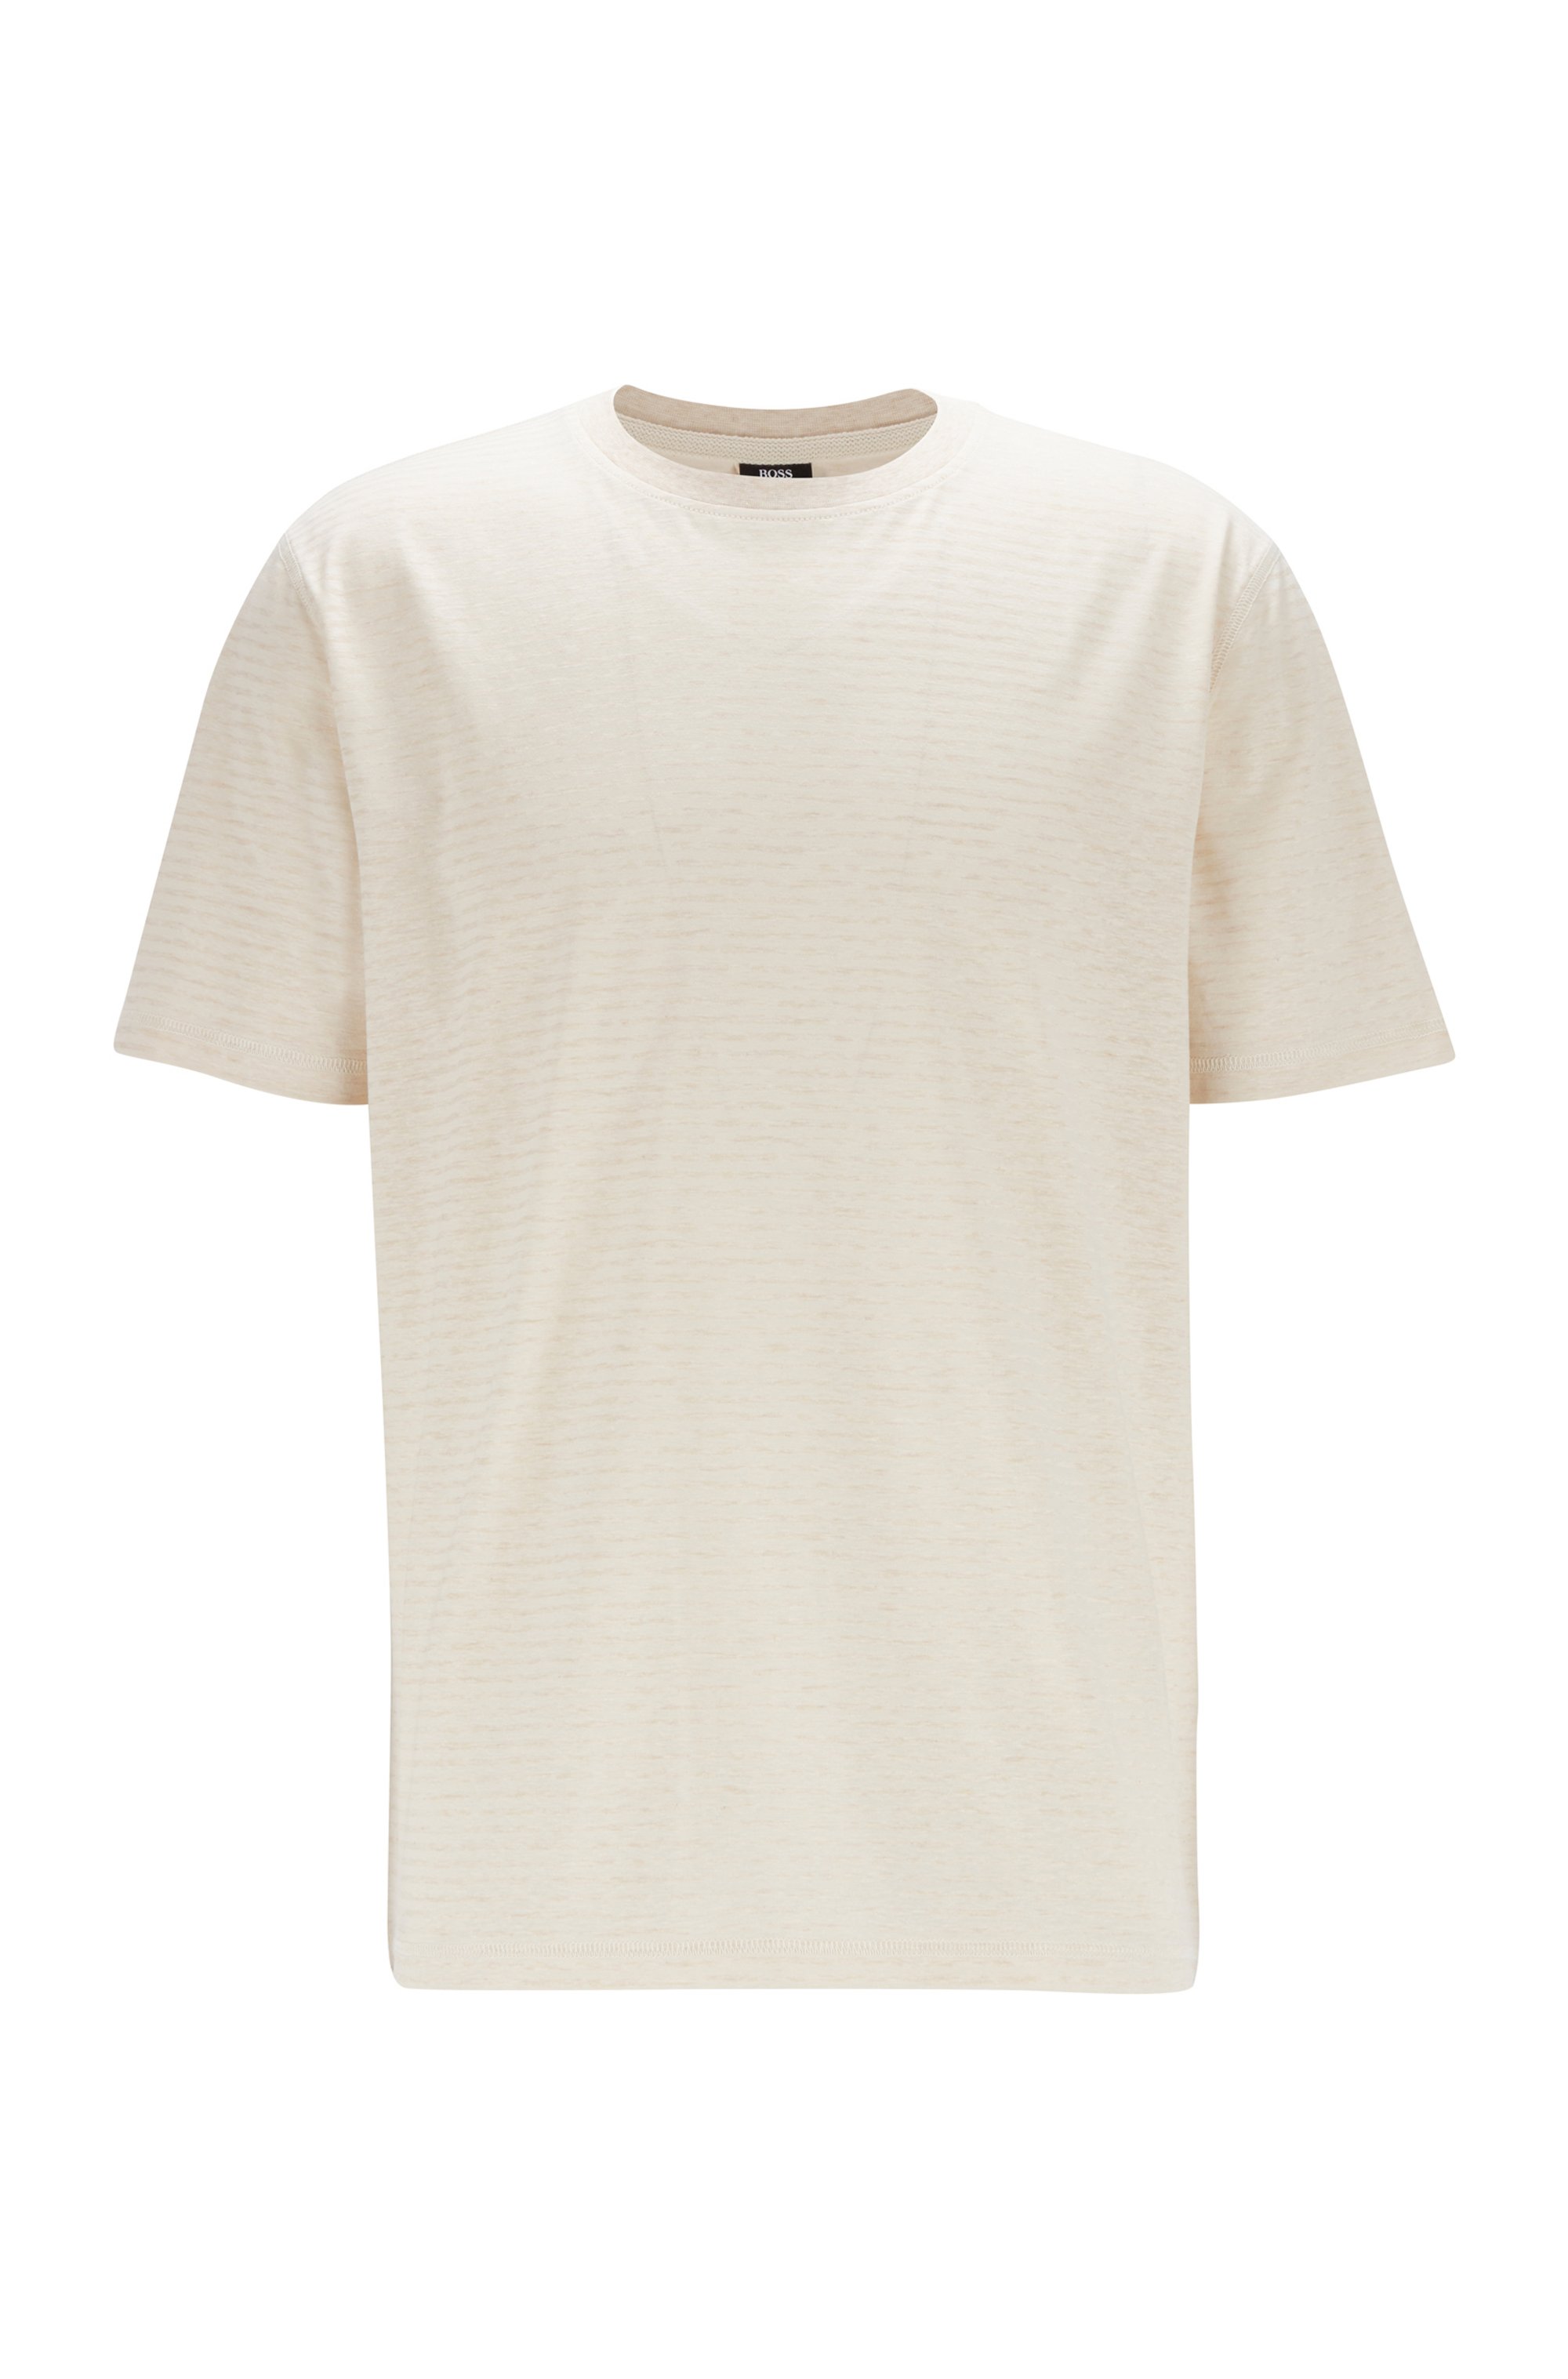 Striped T-shirt in organic cotton and hemp, Light Beige